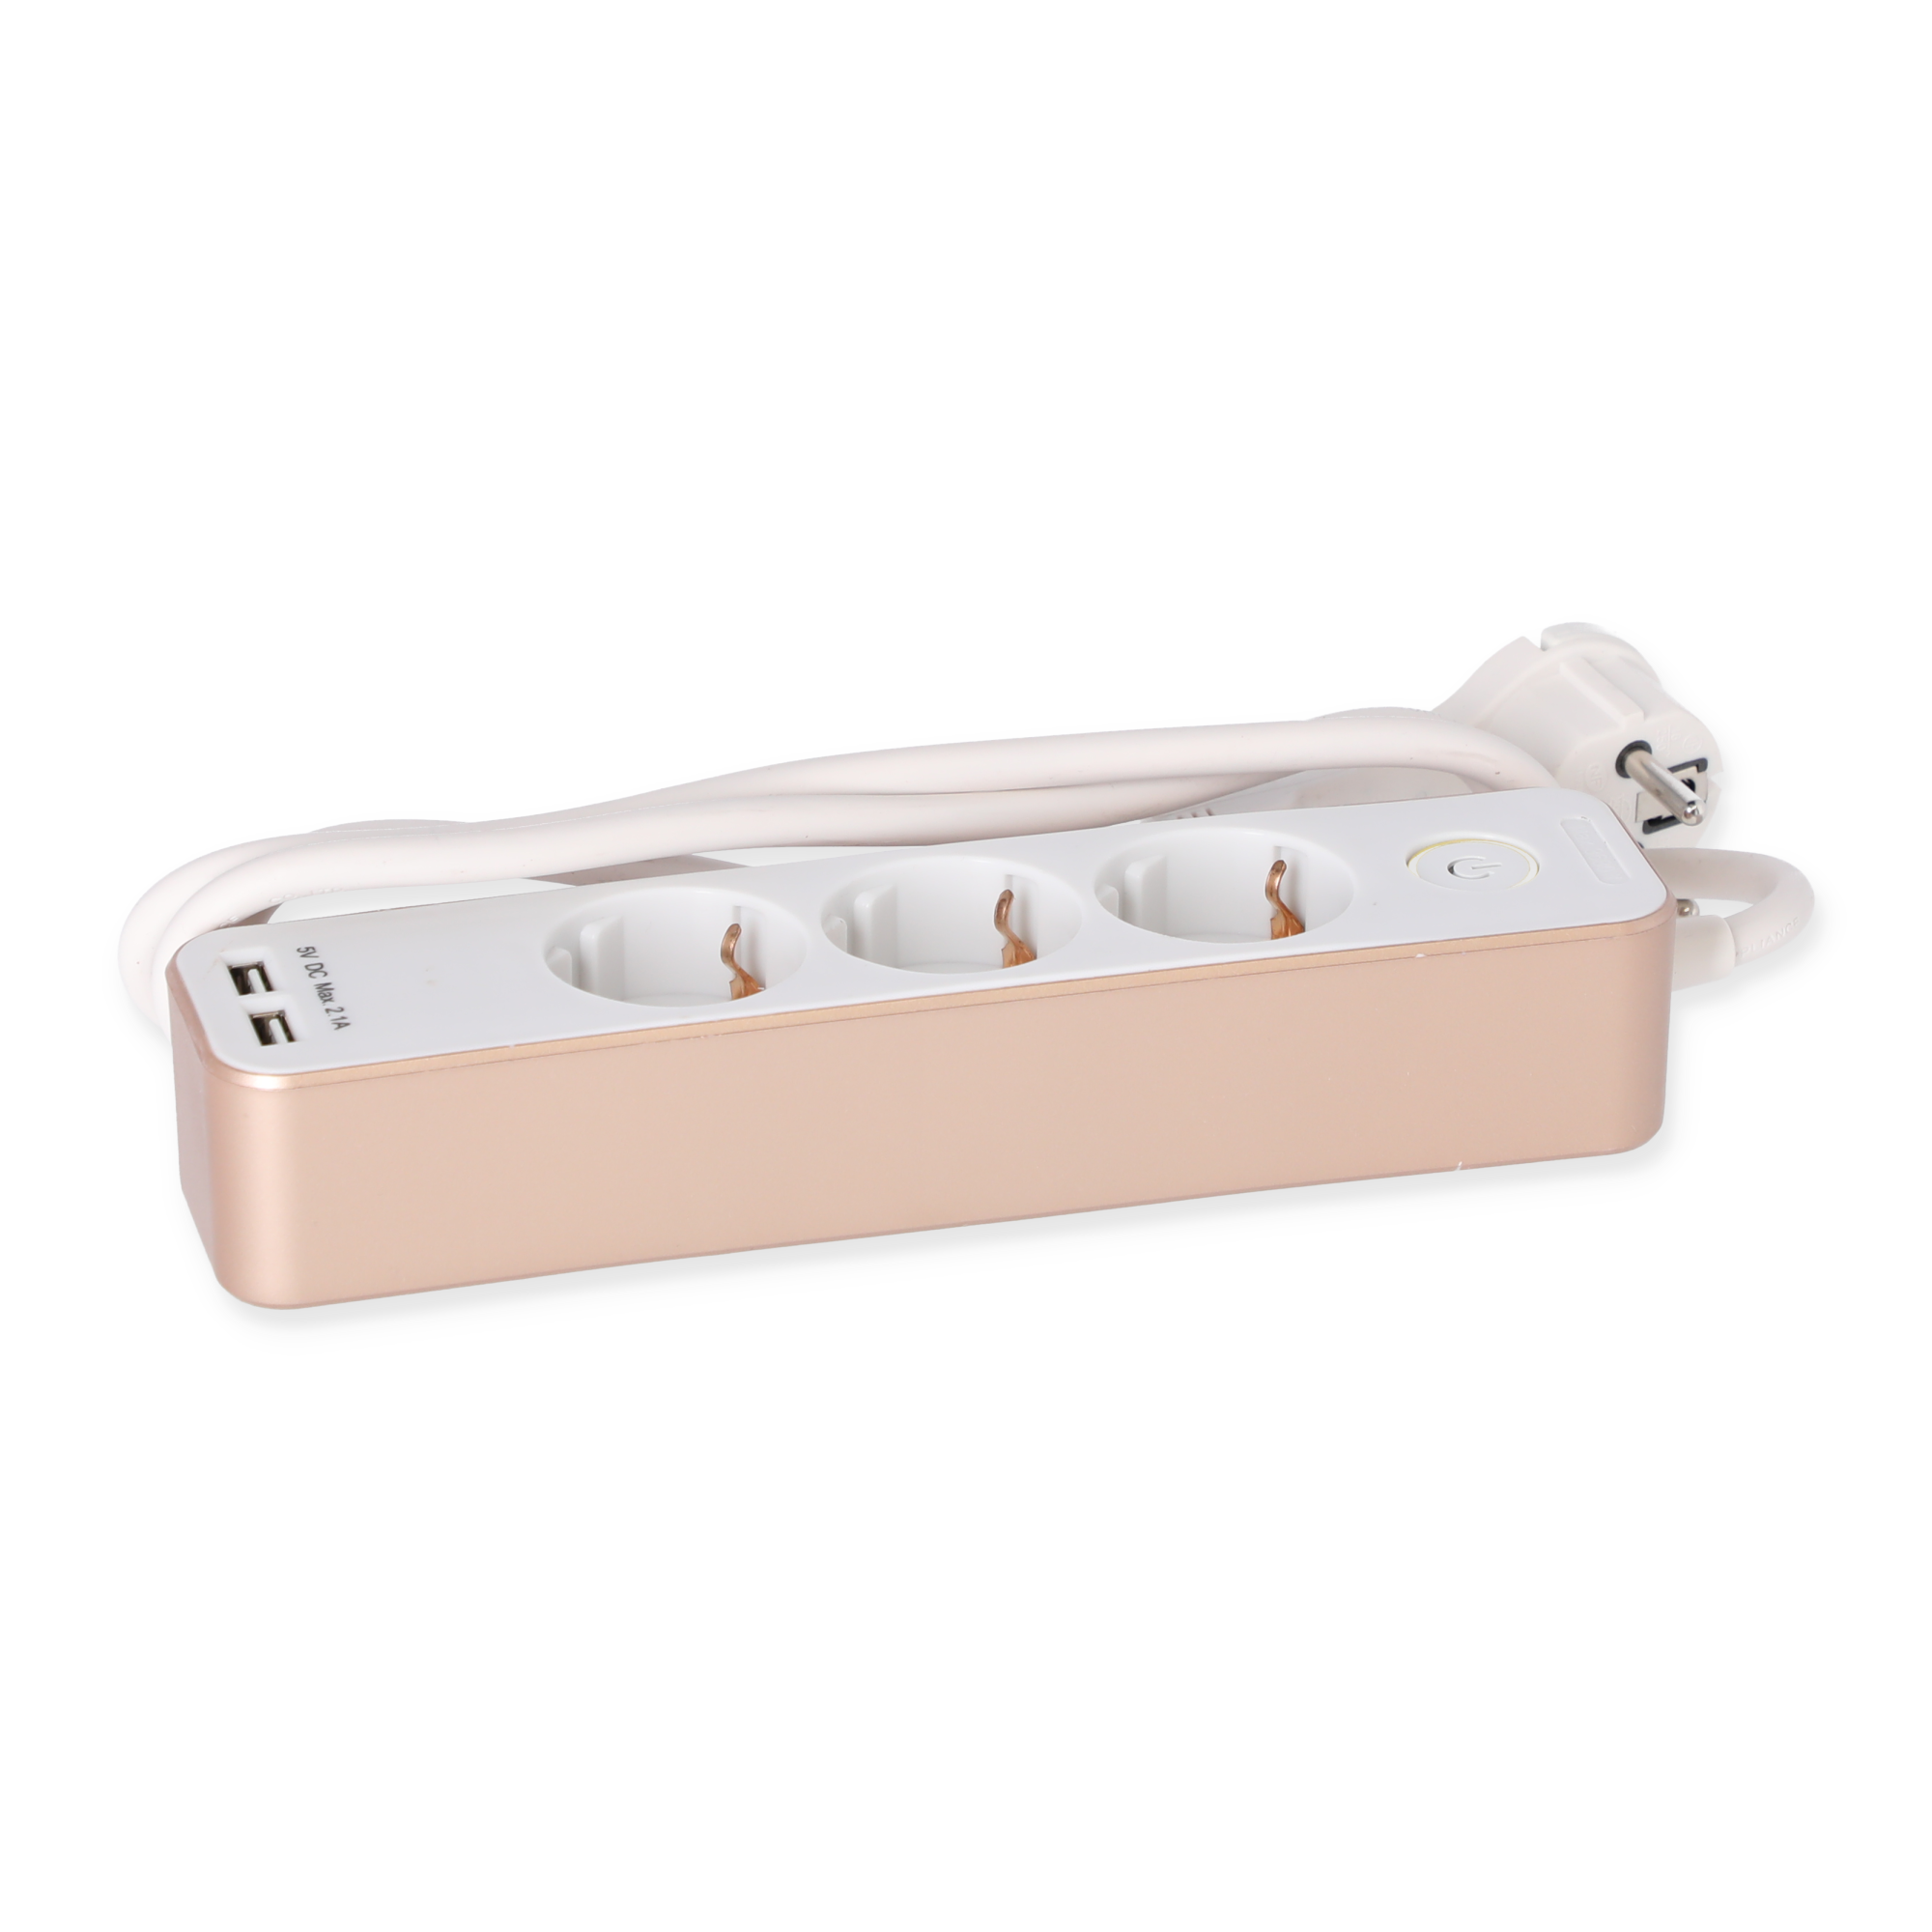 Steckdosenleiste weiß/gold 3-fach mit 2 USB-Ports + product picture